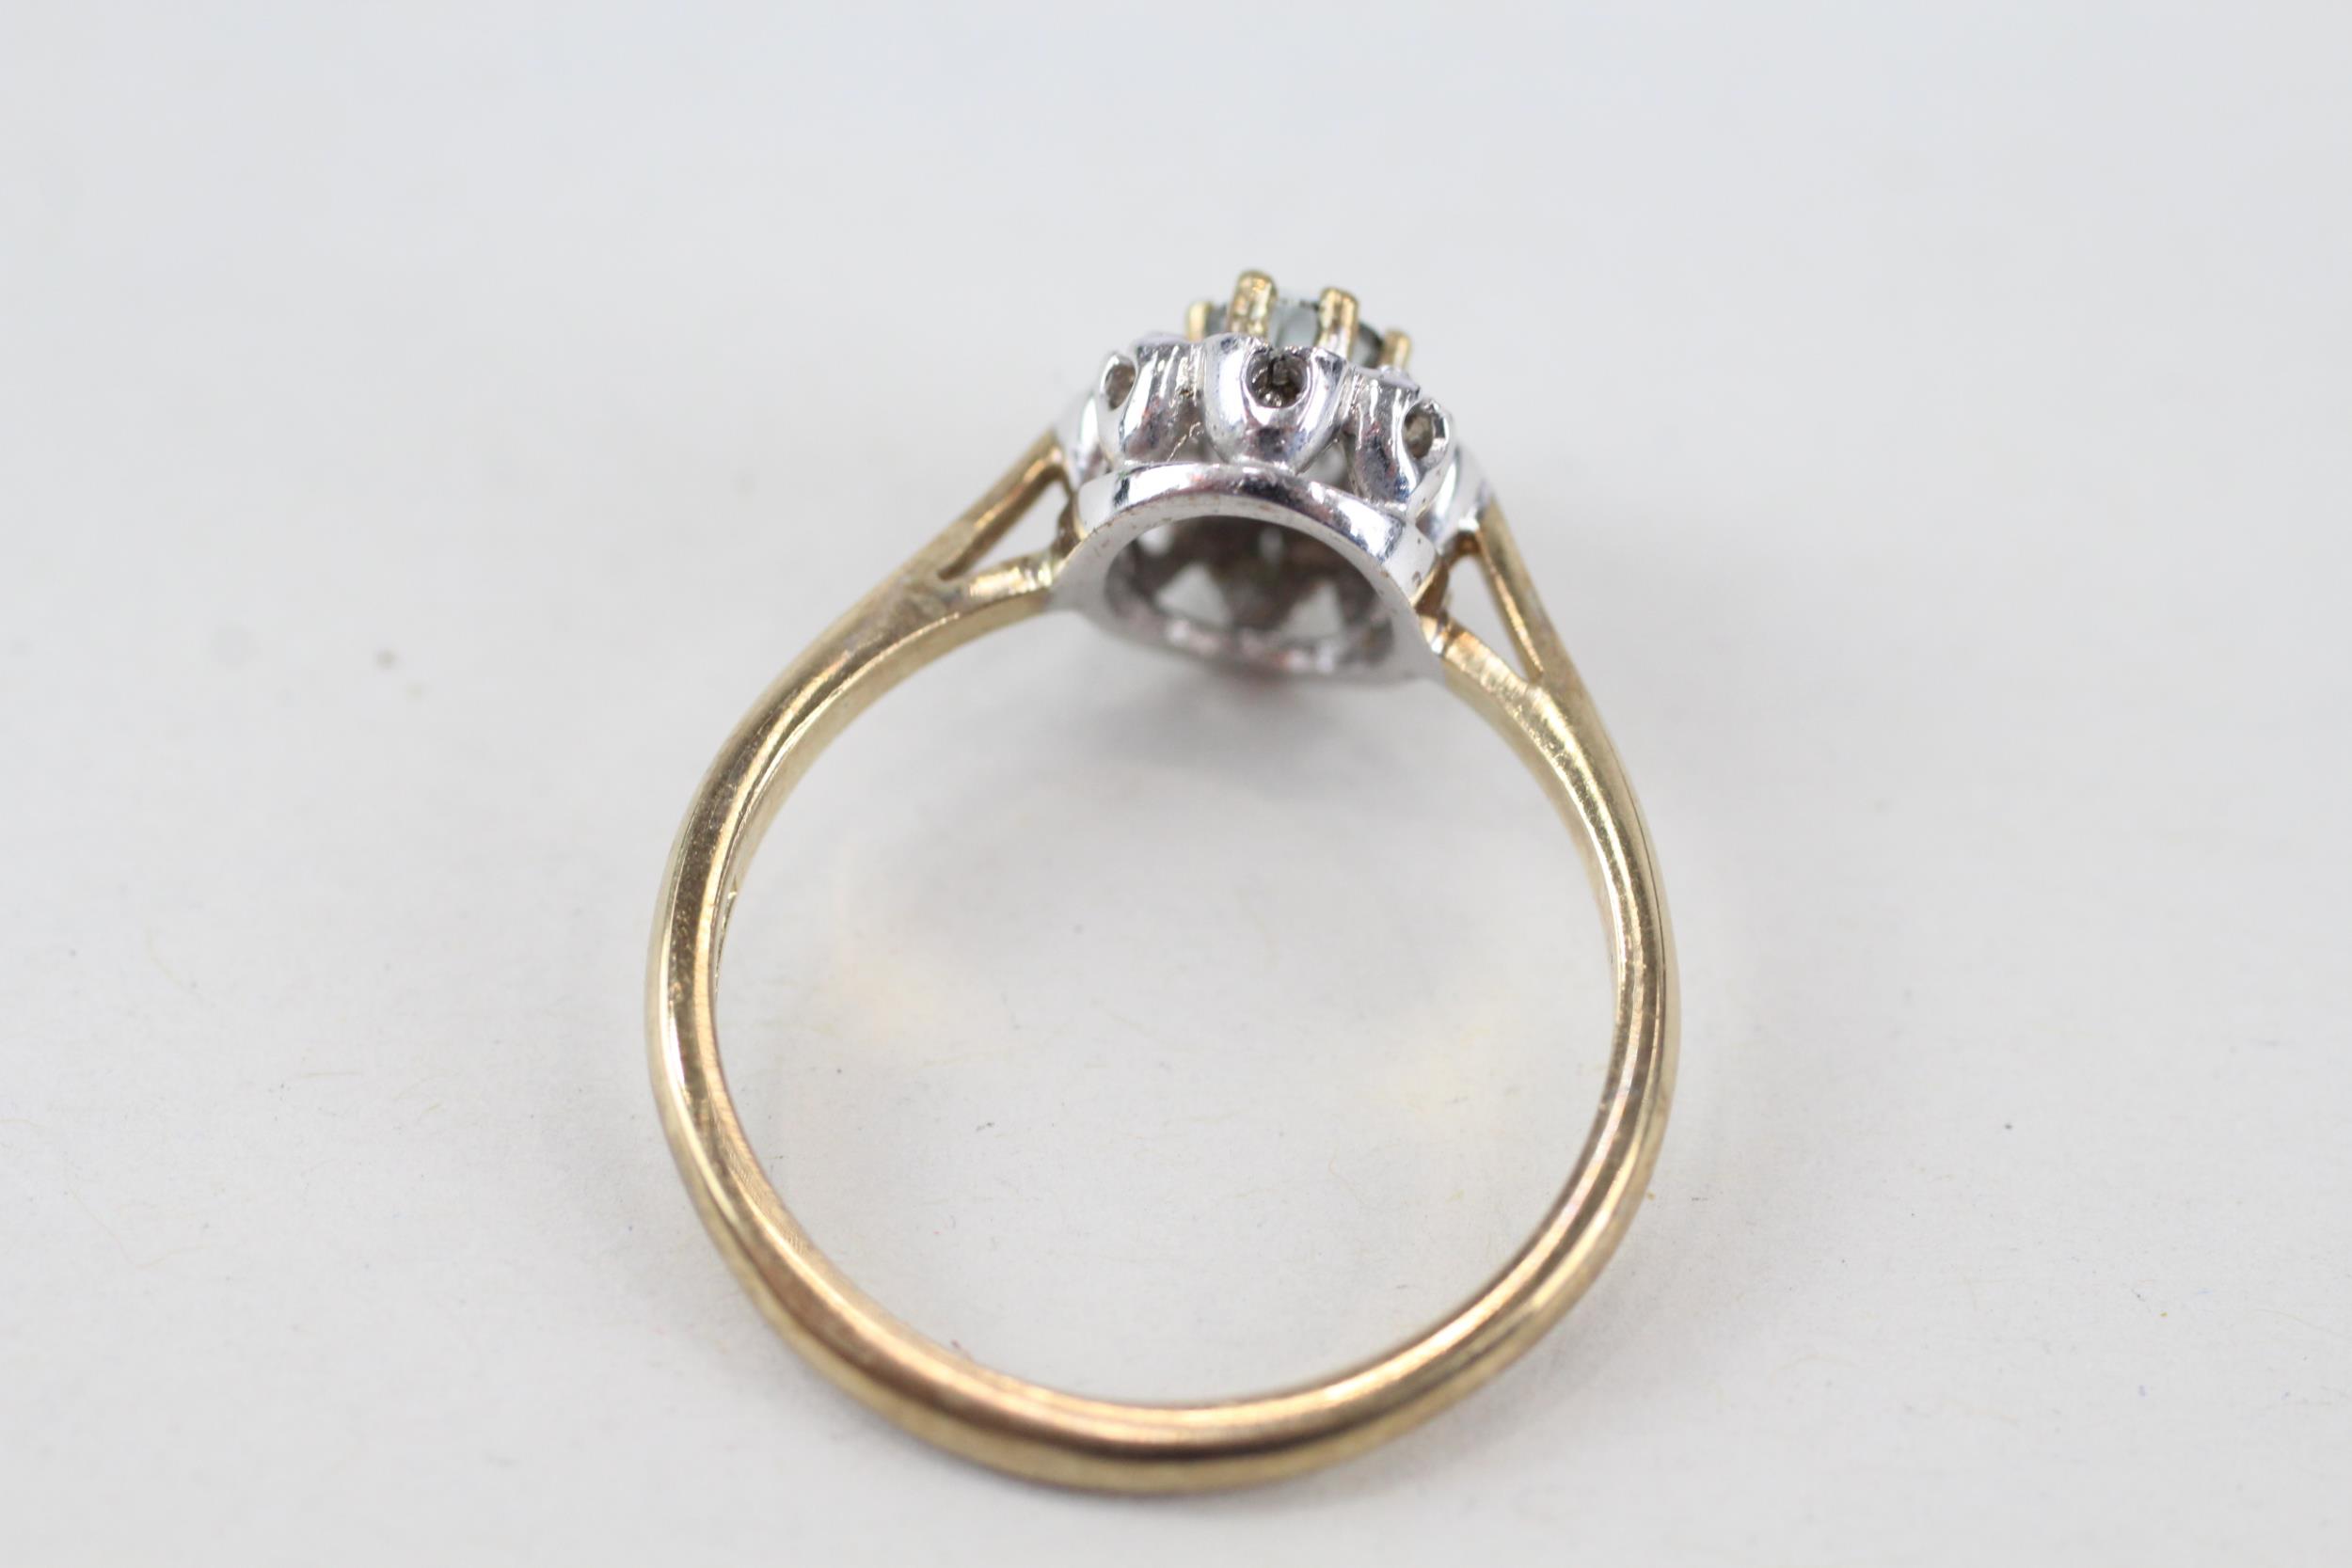 9ct gold oval cut aquamarine & diamond cluster ring (2.6g) Size O - Image 4 of 4